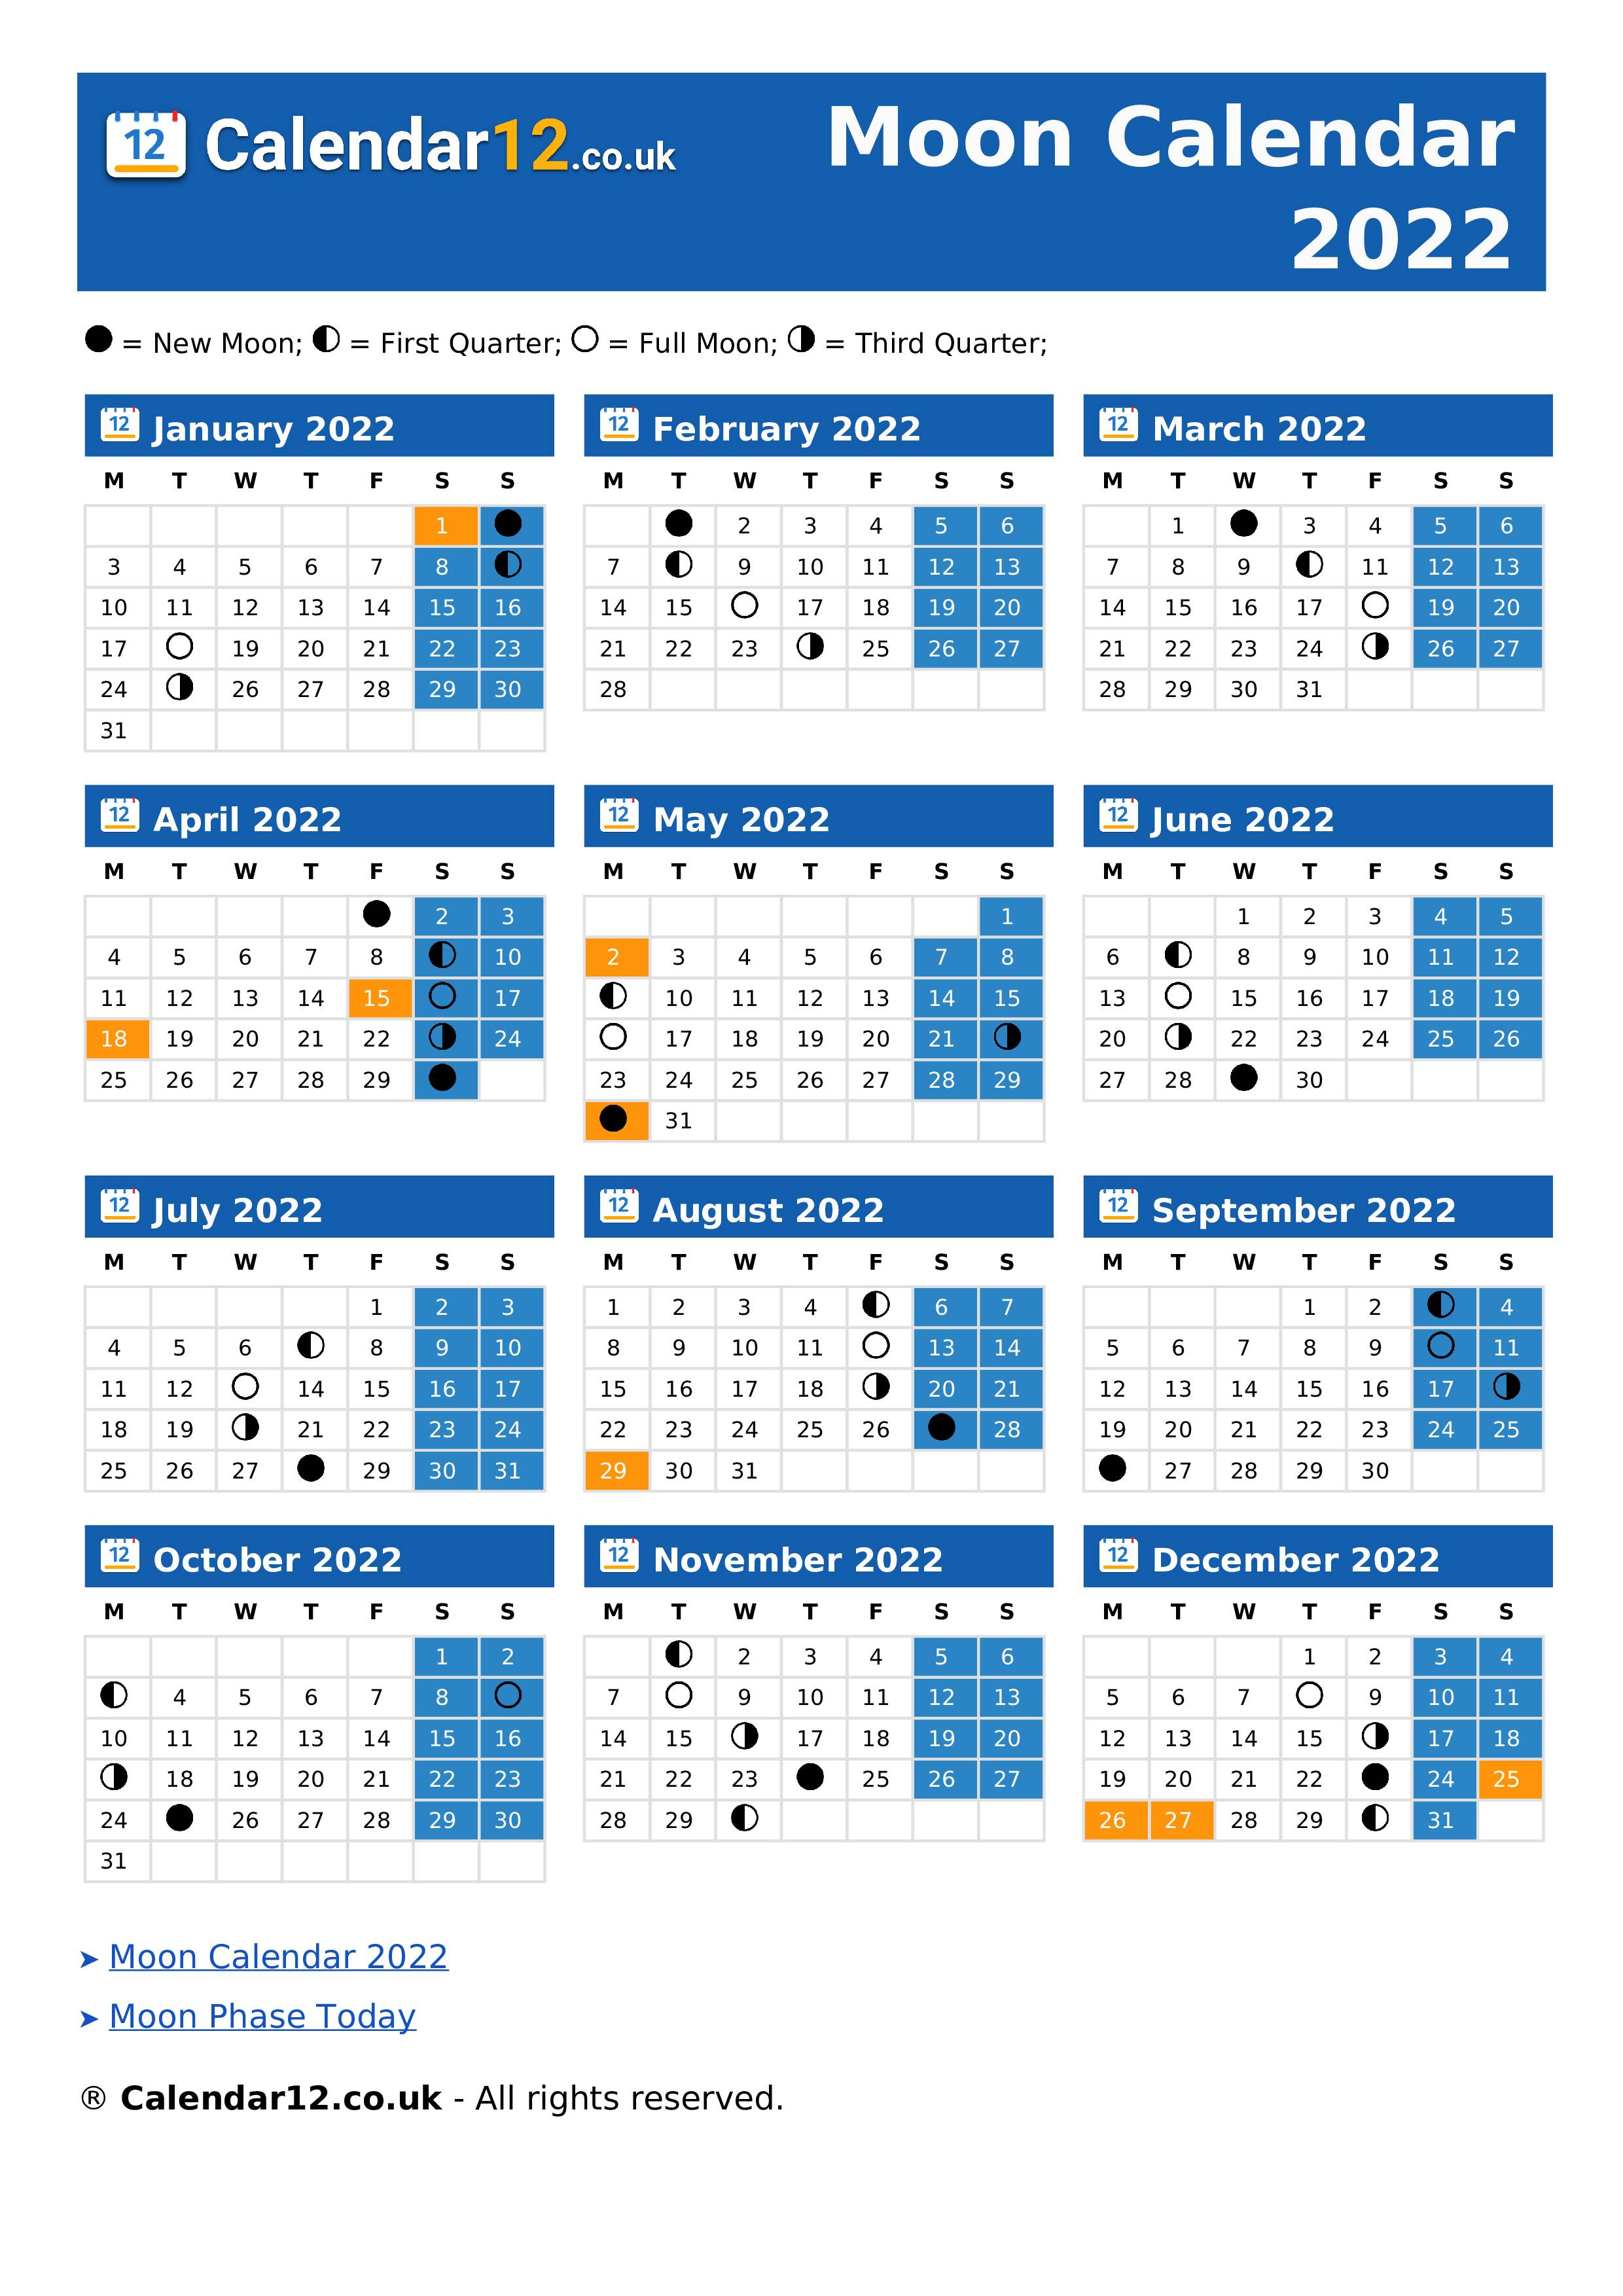 October 2022 Lunar Calendar Moon Calendar October 2022 ⬅️ — Calendar12.Co.uk